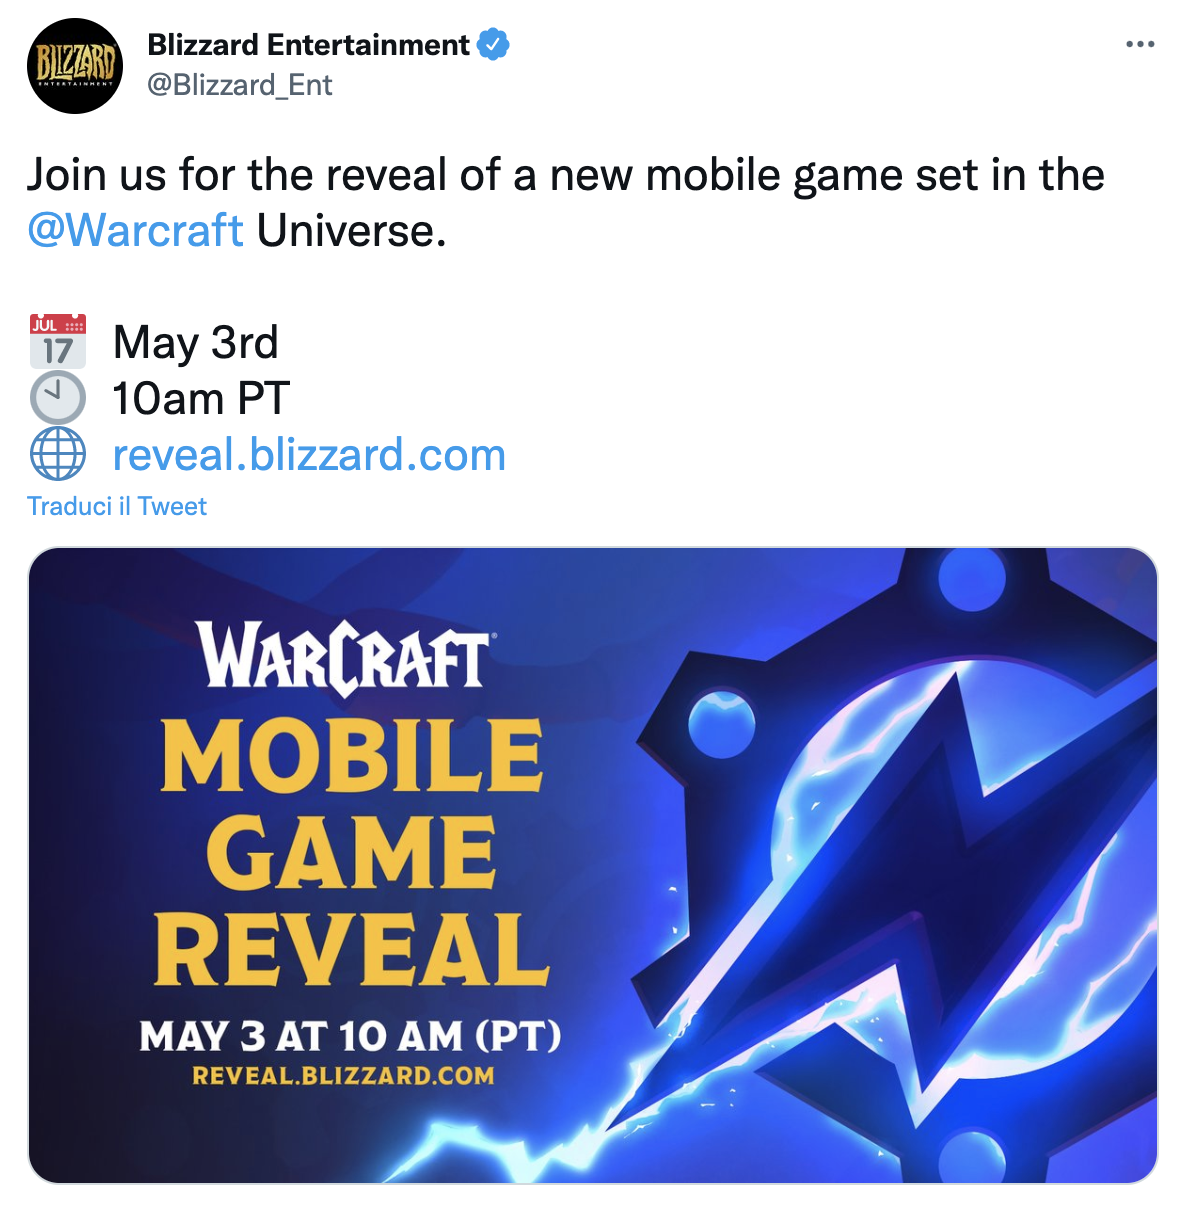 Warcraft Mobile